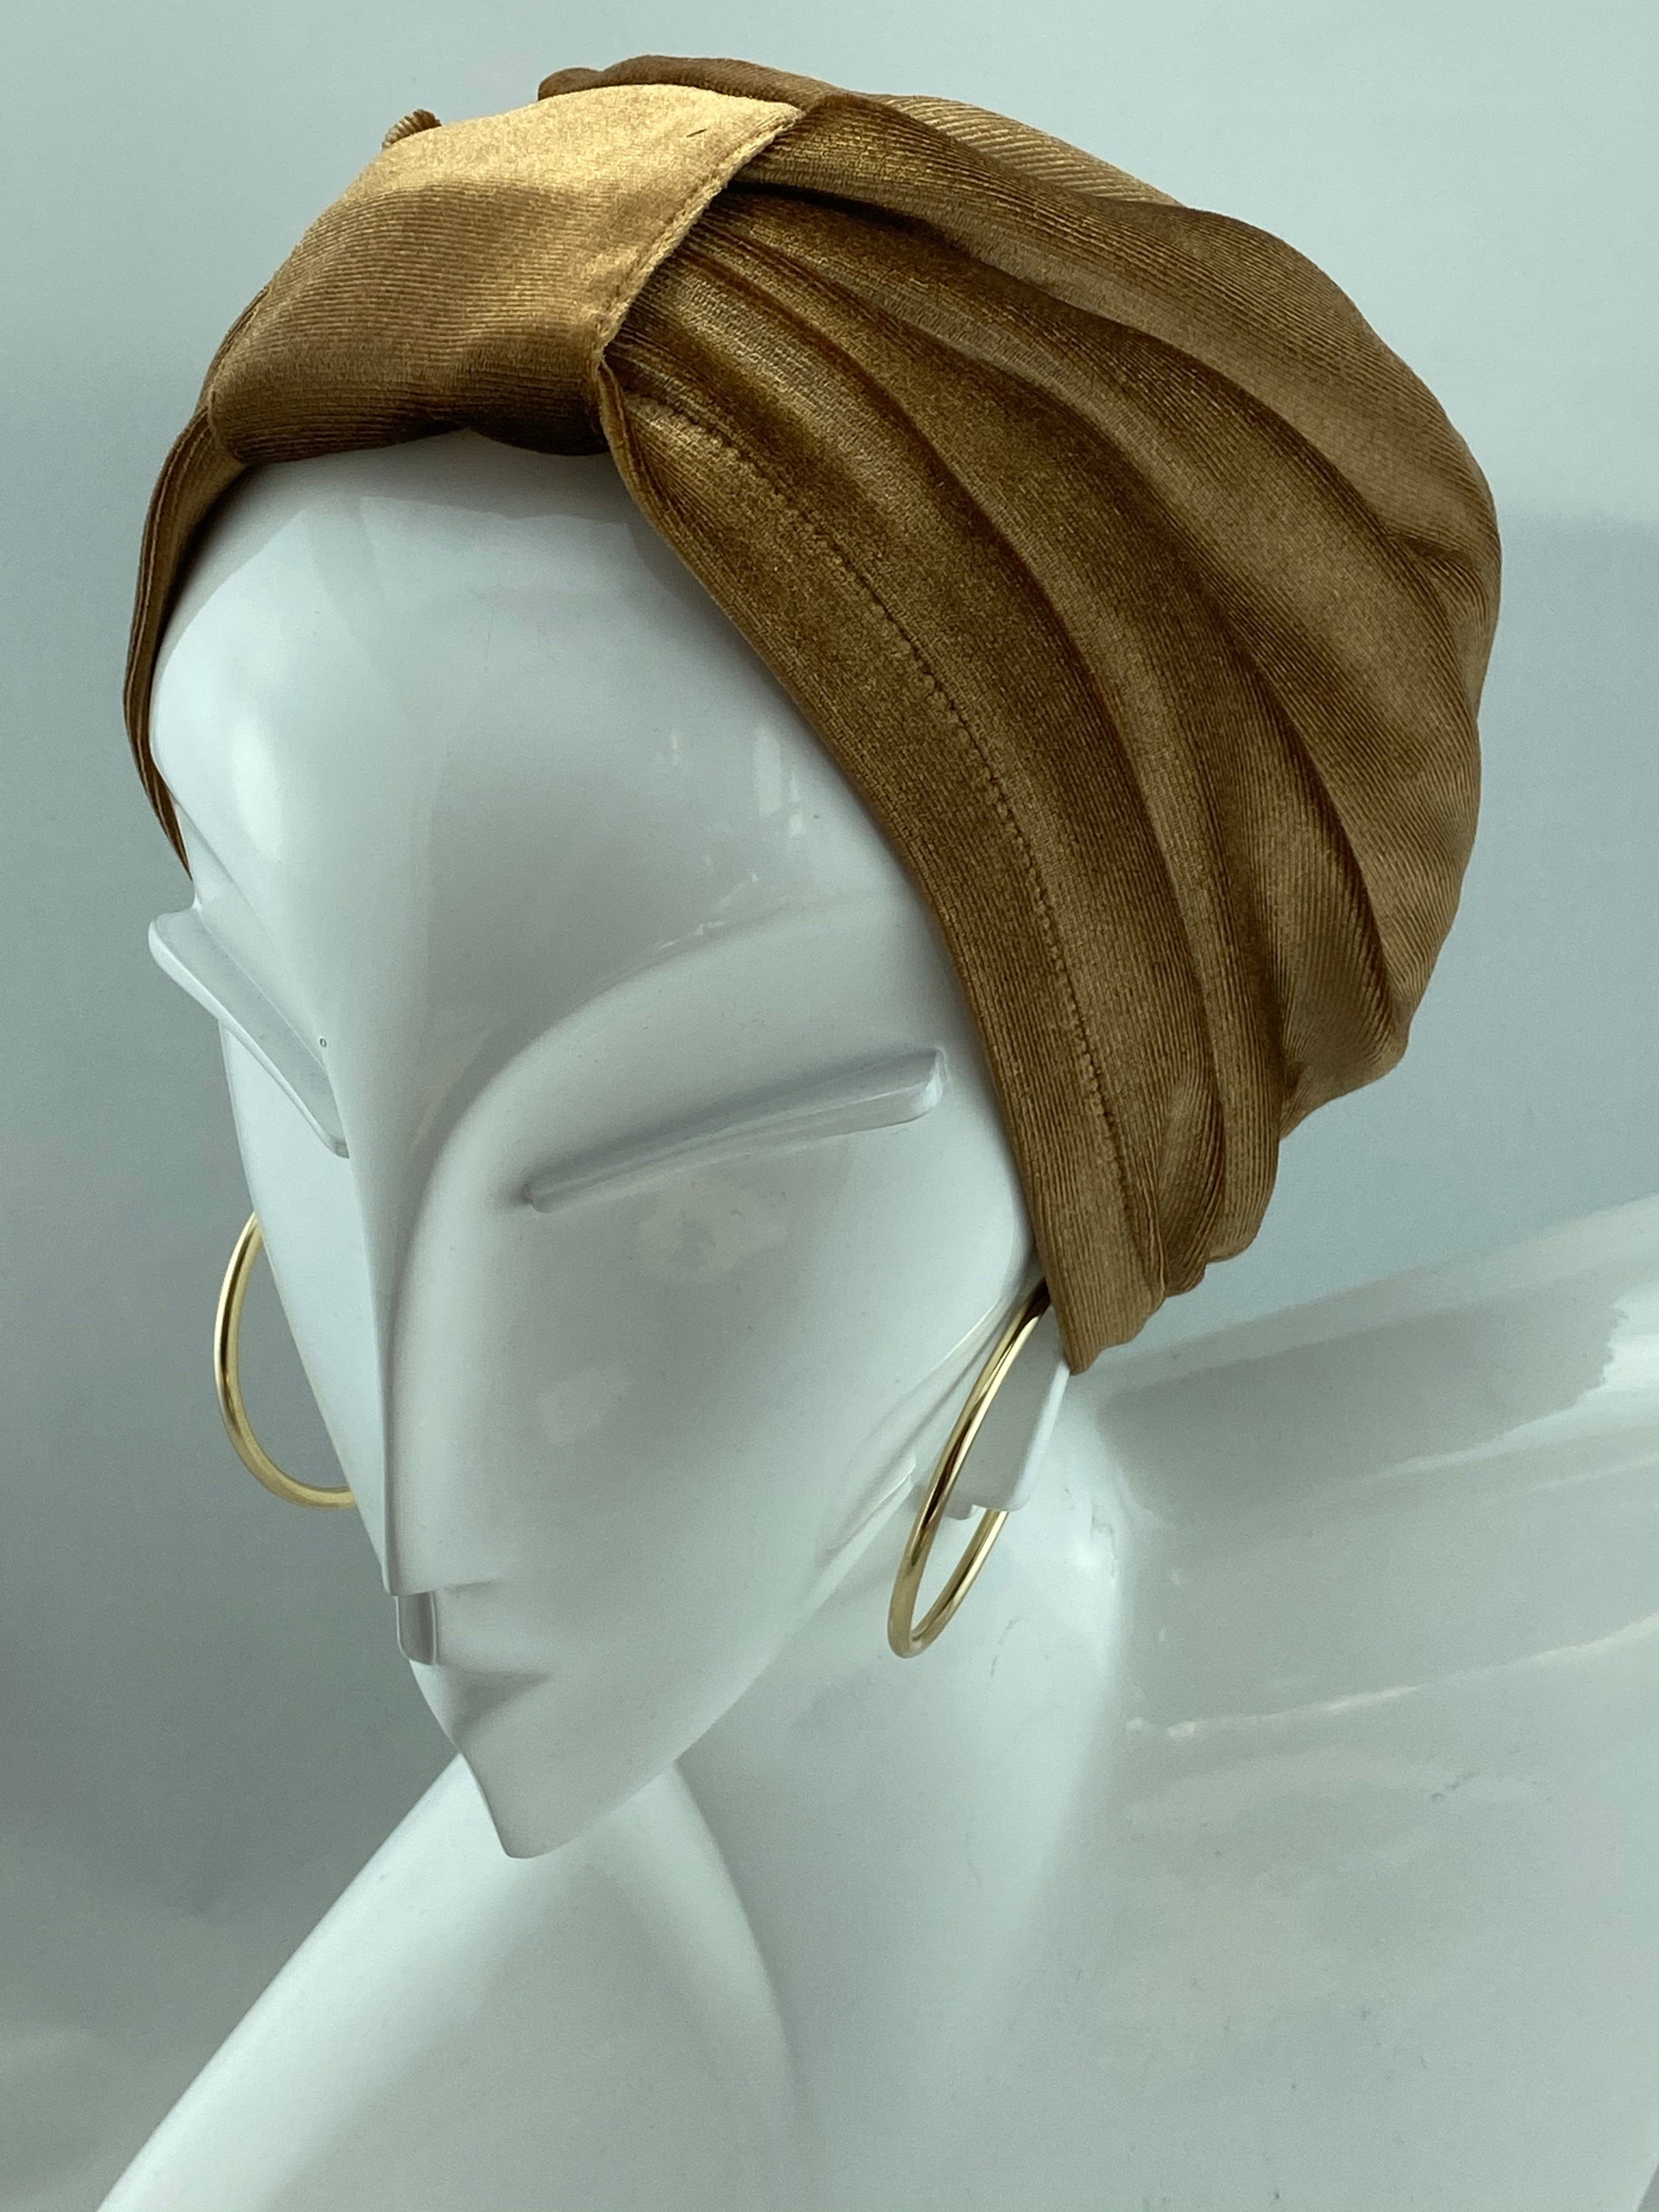 TurbansStuff Turban Copy of Basic Velvet Turban - Golden Brown Handmade Luxury Fashion Women Headwrap